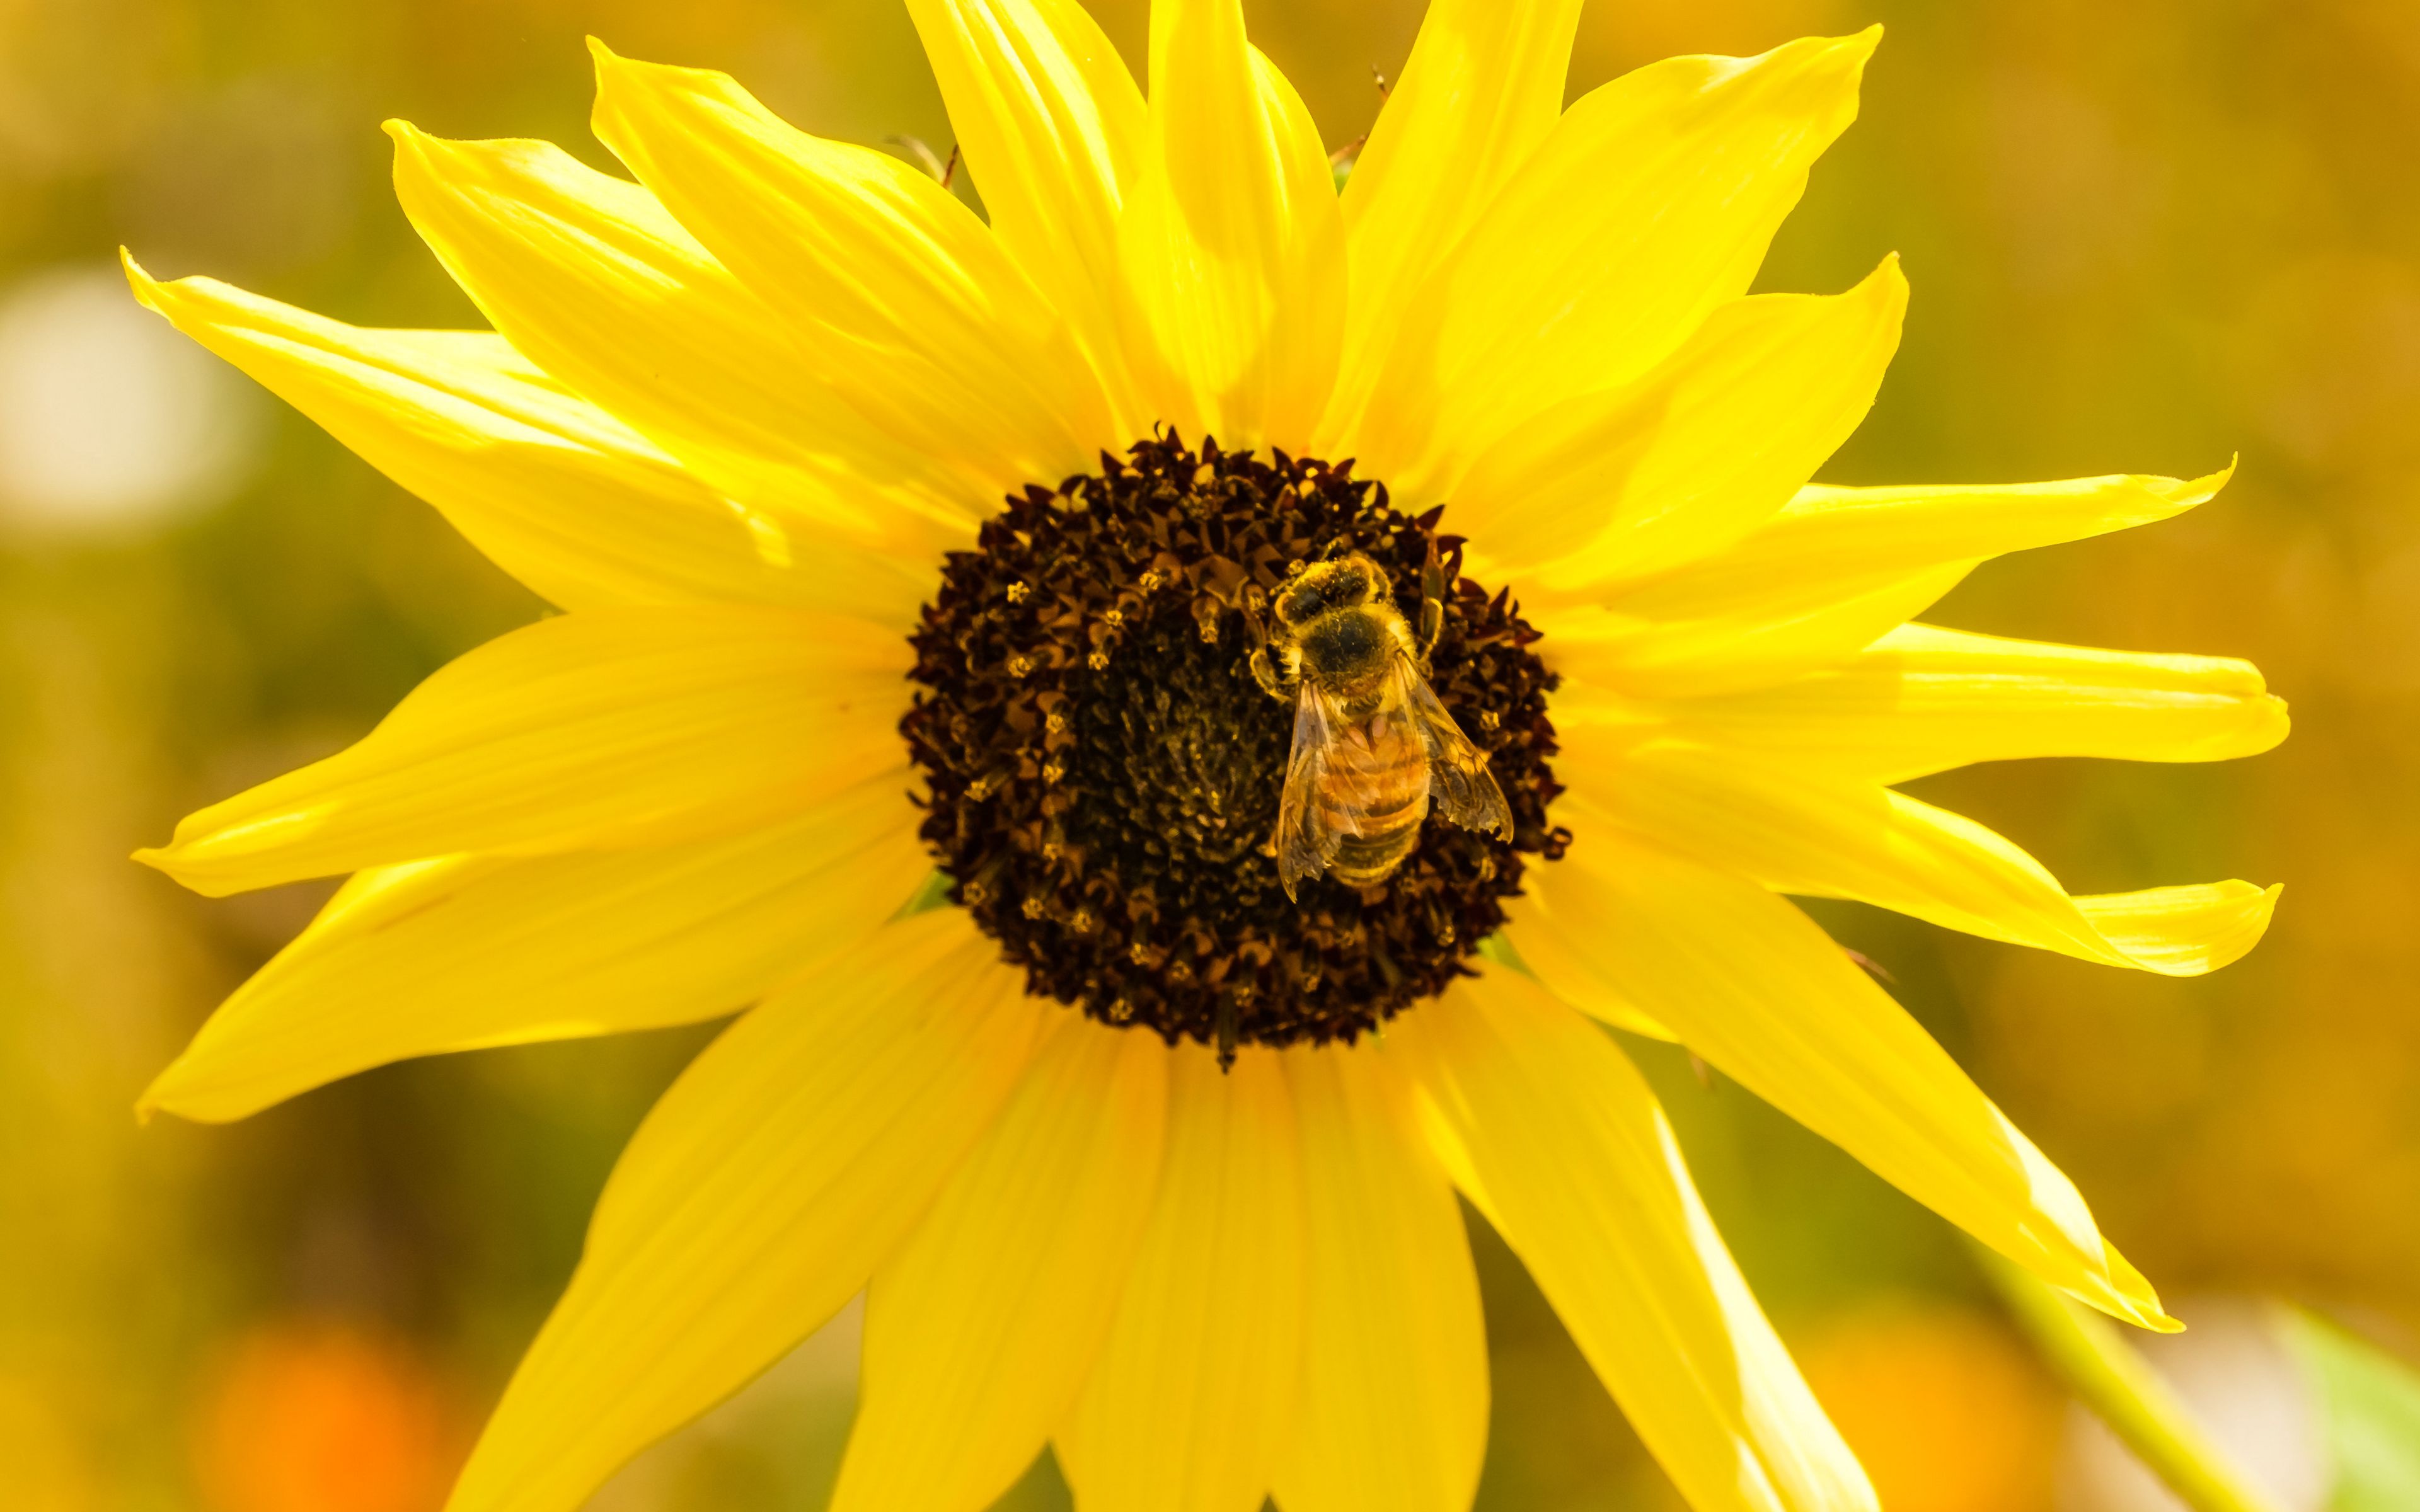 Wallpaper Bee over sunflower